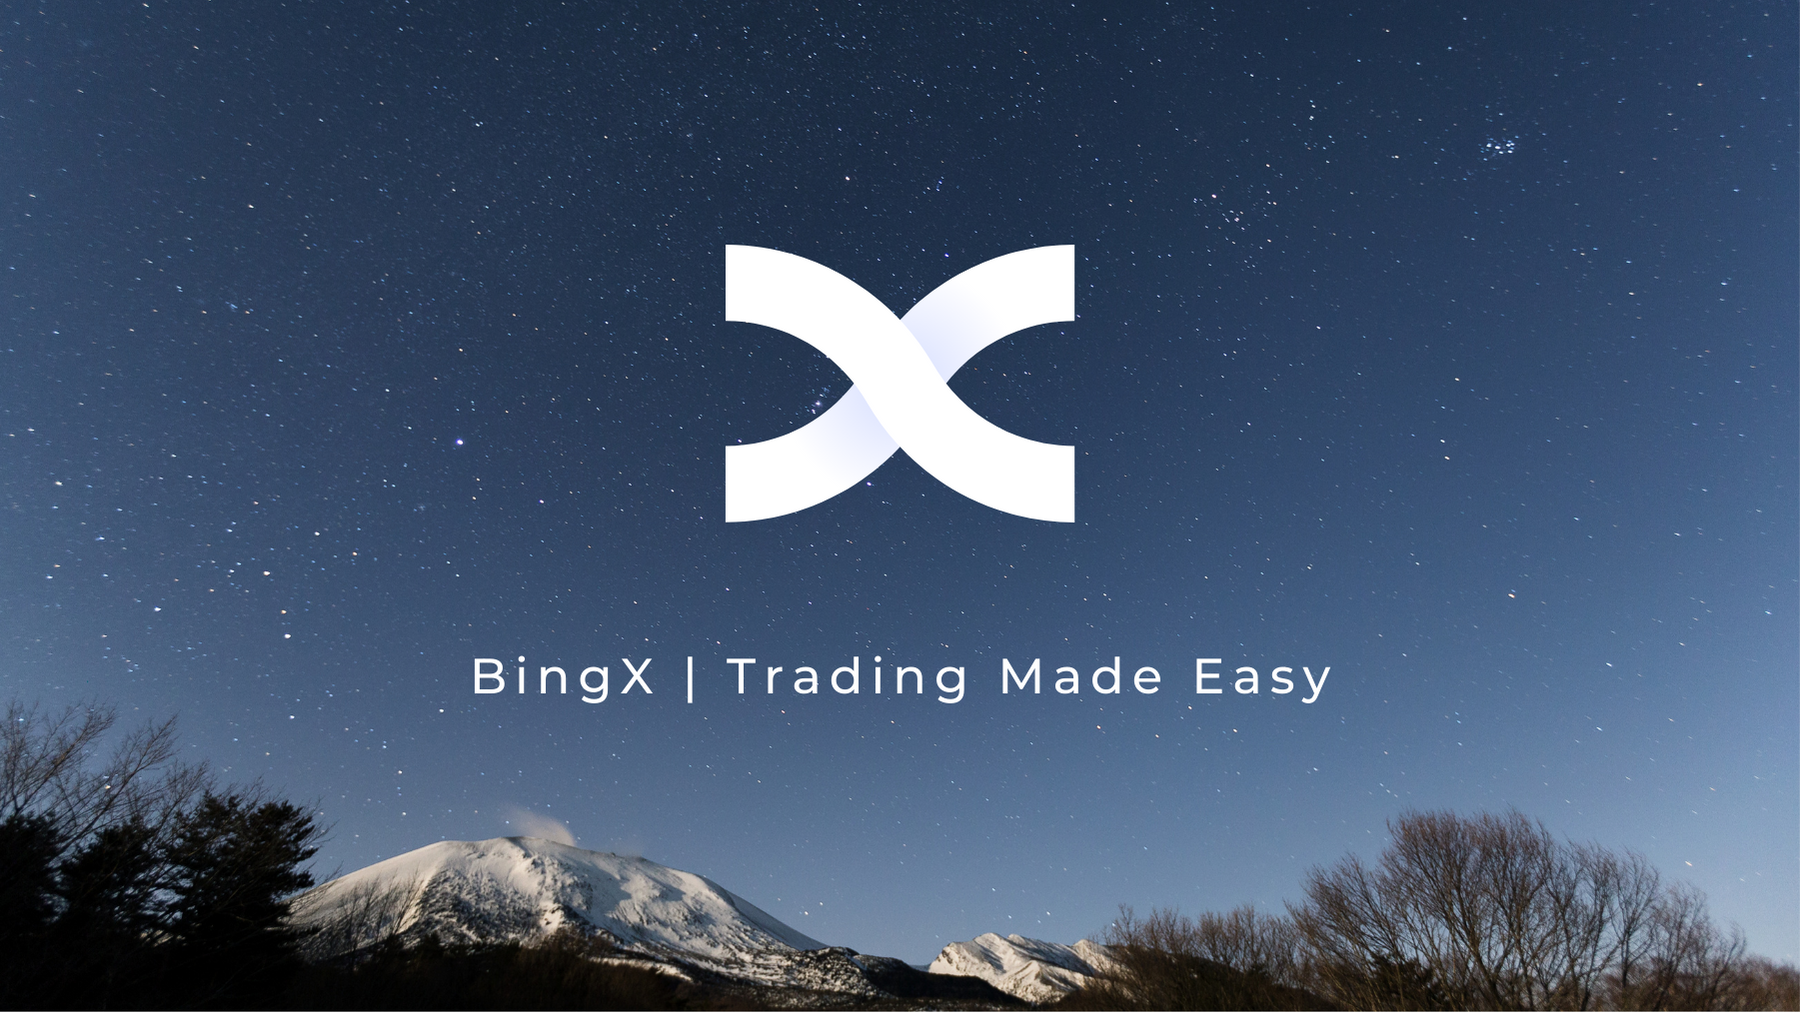 Upgraded Brand Identity: BingX Rebranded to BingX Now! – BingX